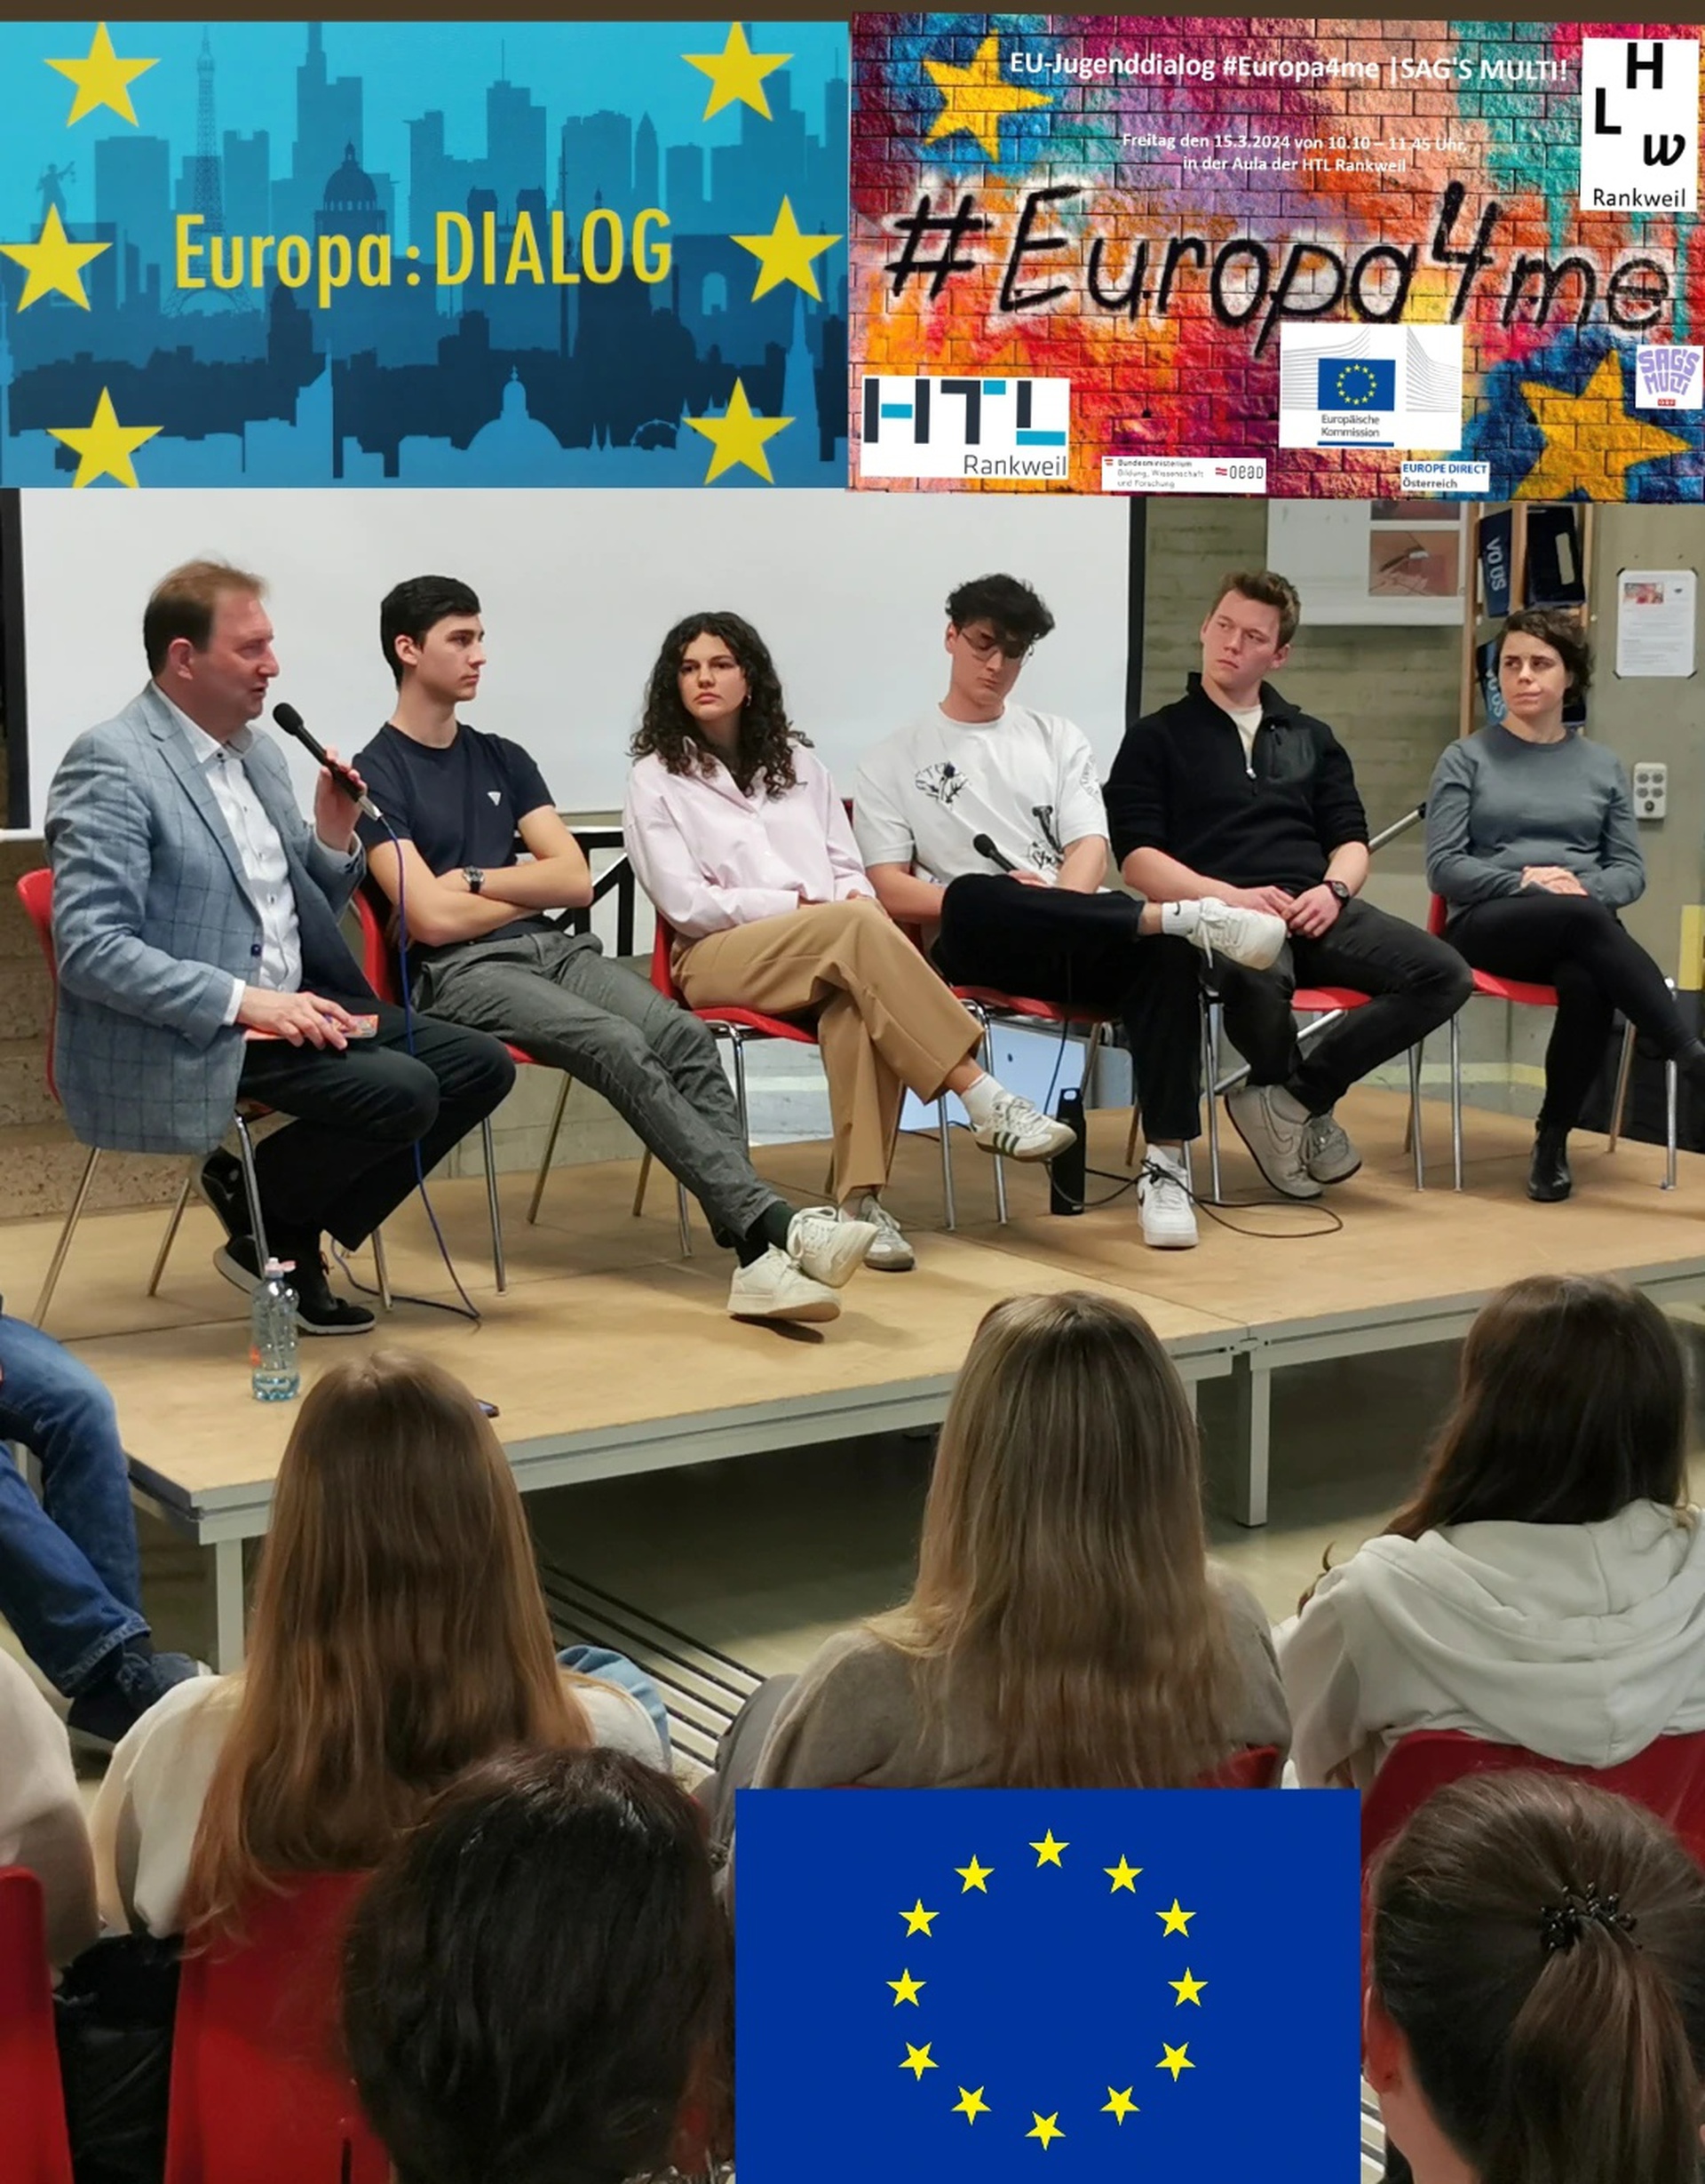 EU-Jugenddialog